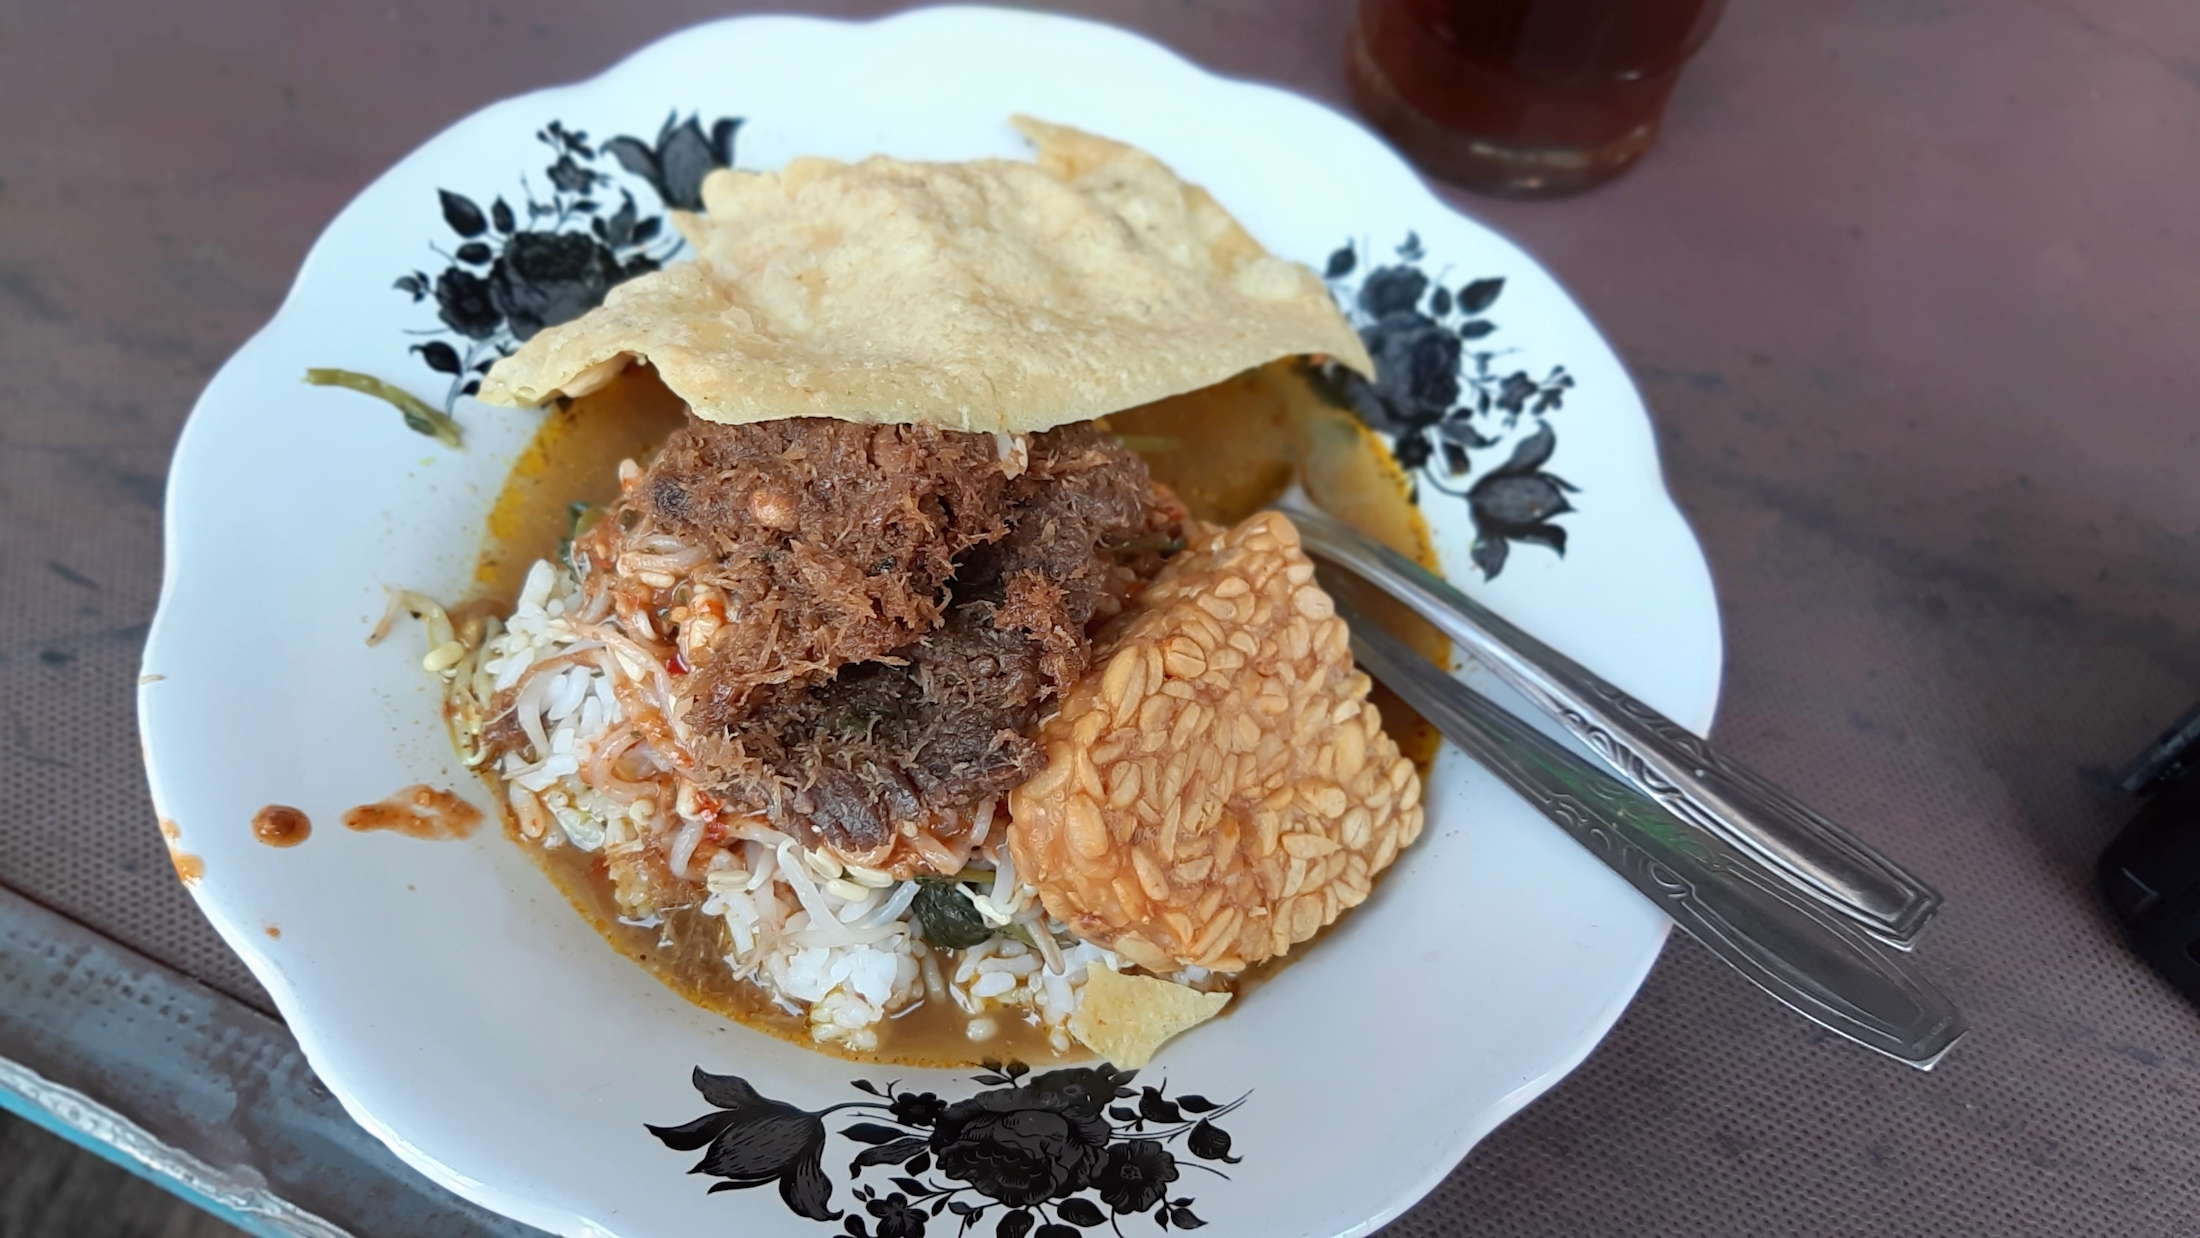 Kuliner Unik Banyuwangi 2 Hidangan Jadi 1 Agenda Indonesia